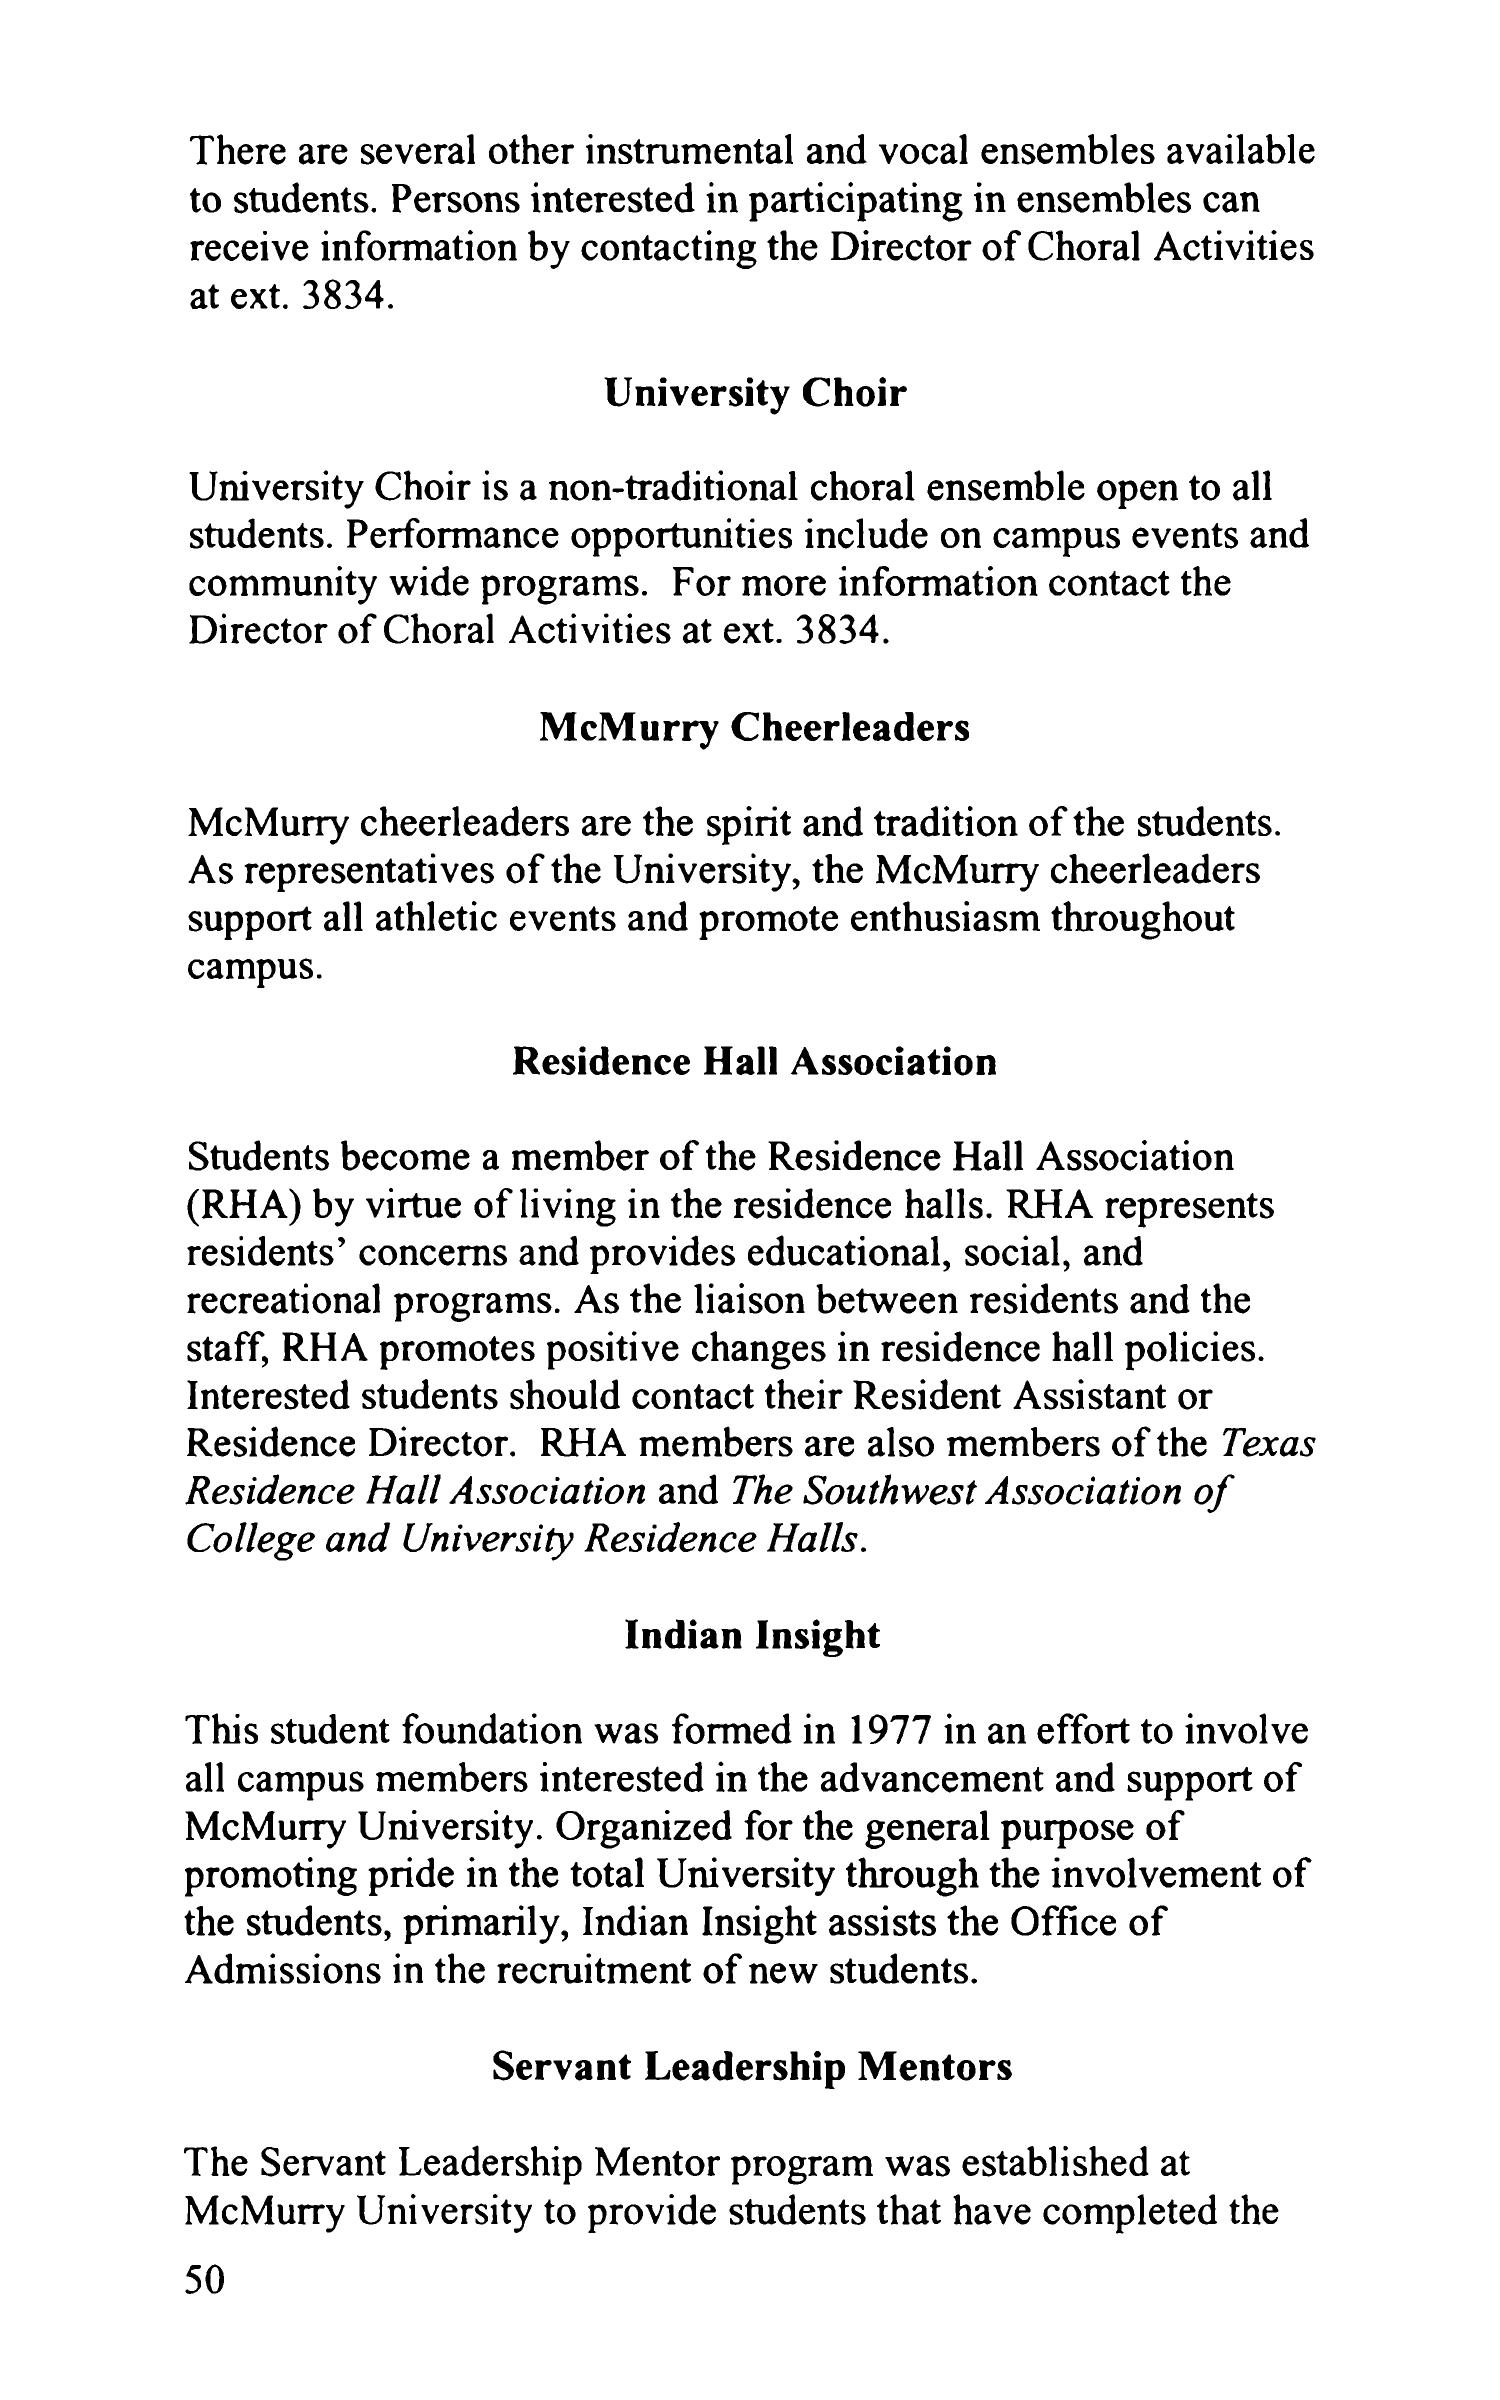 Council Fire, Handbook of McMurry University, 2003-2004
                                                
                                                    50
                                                